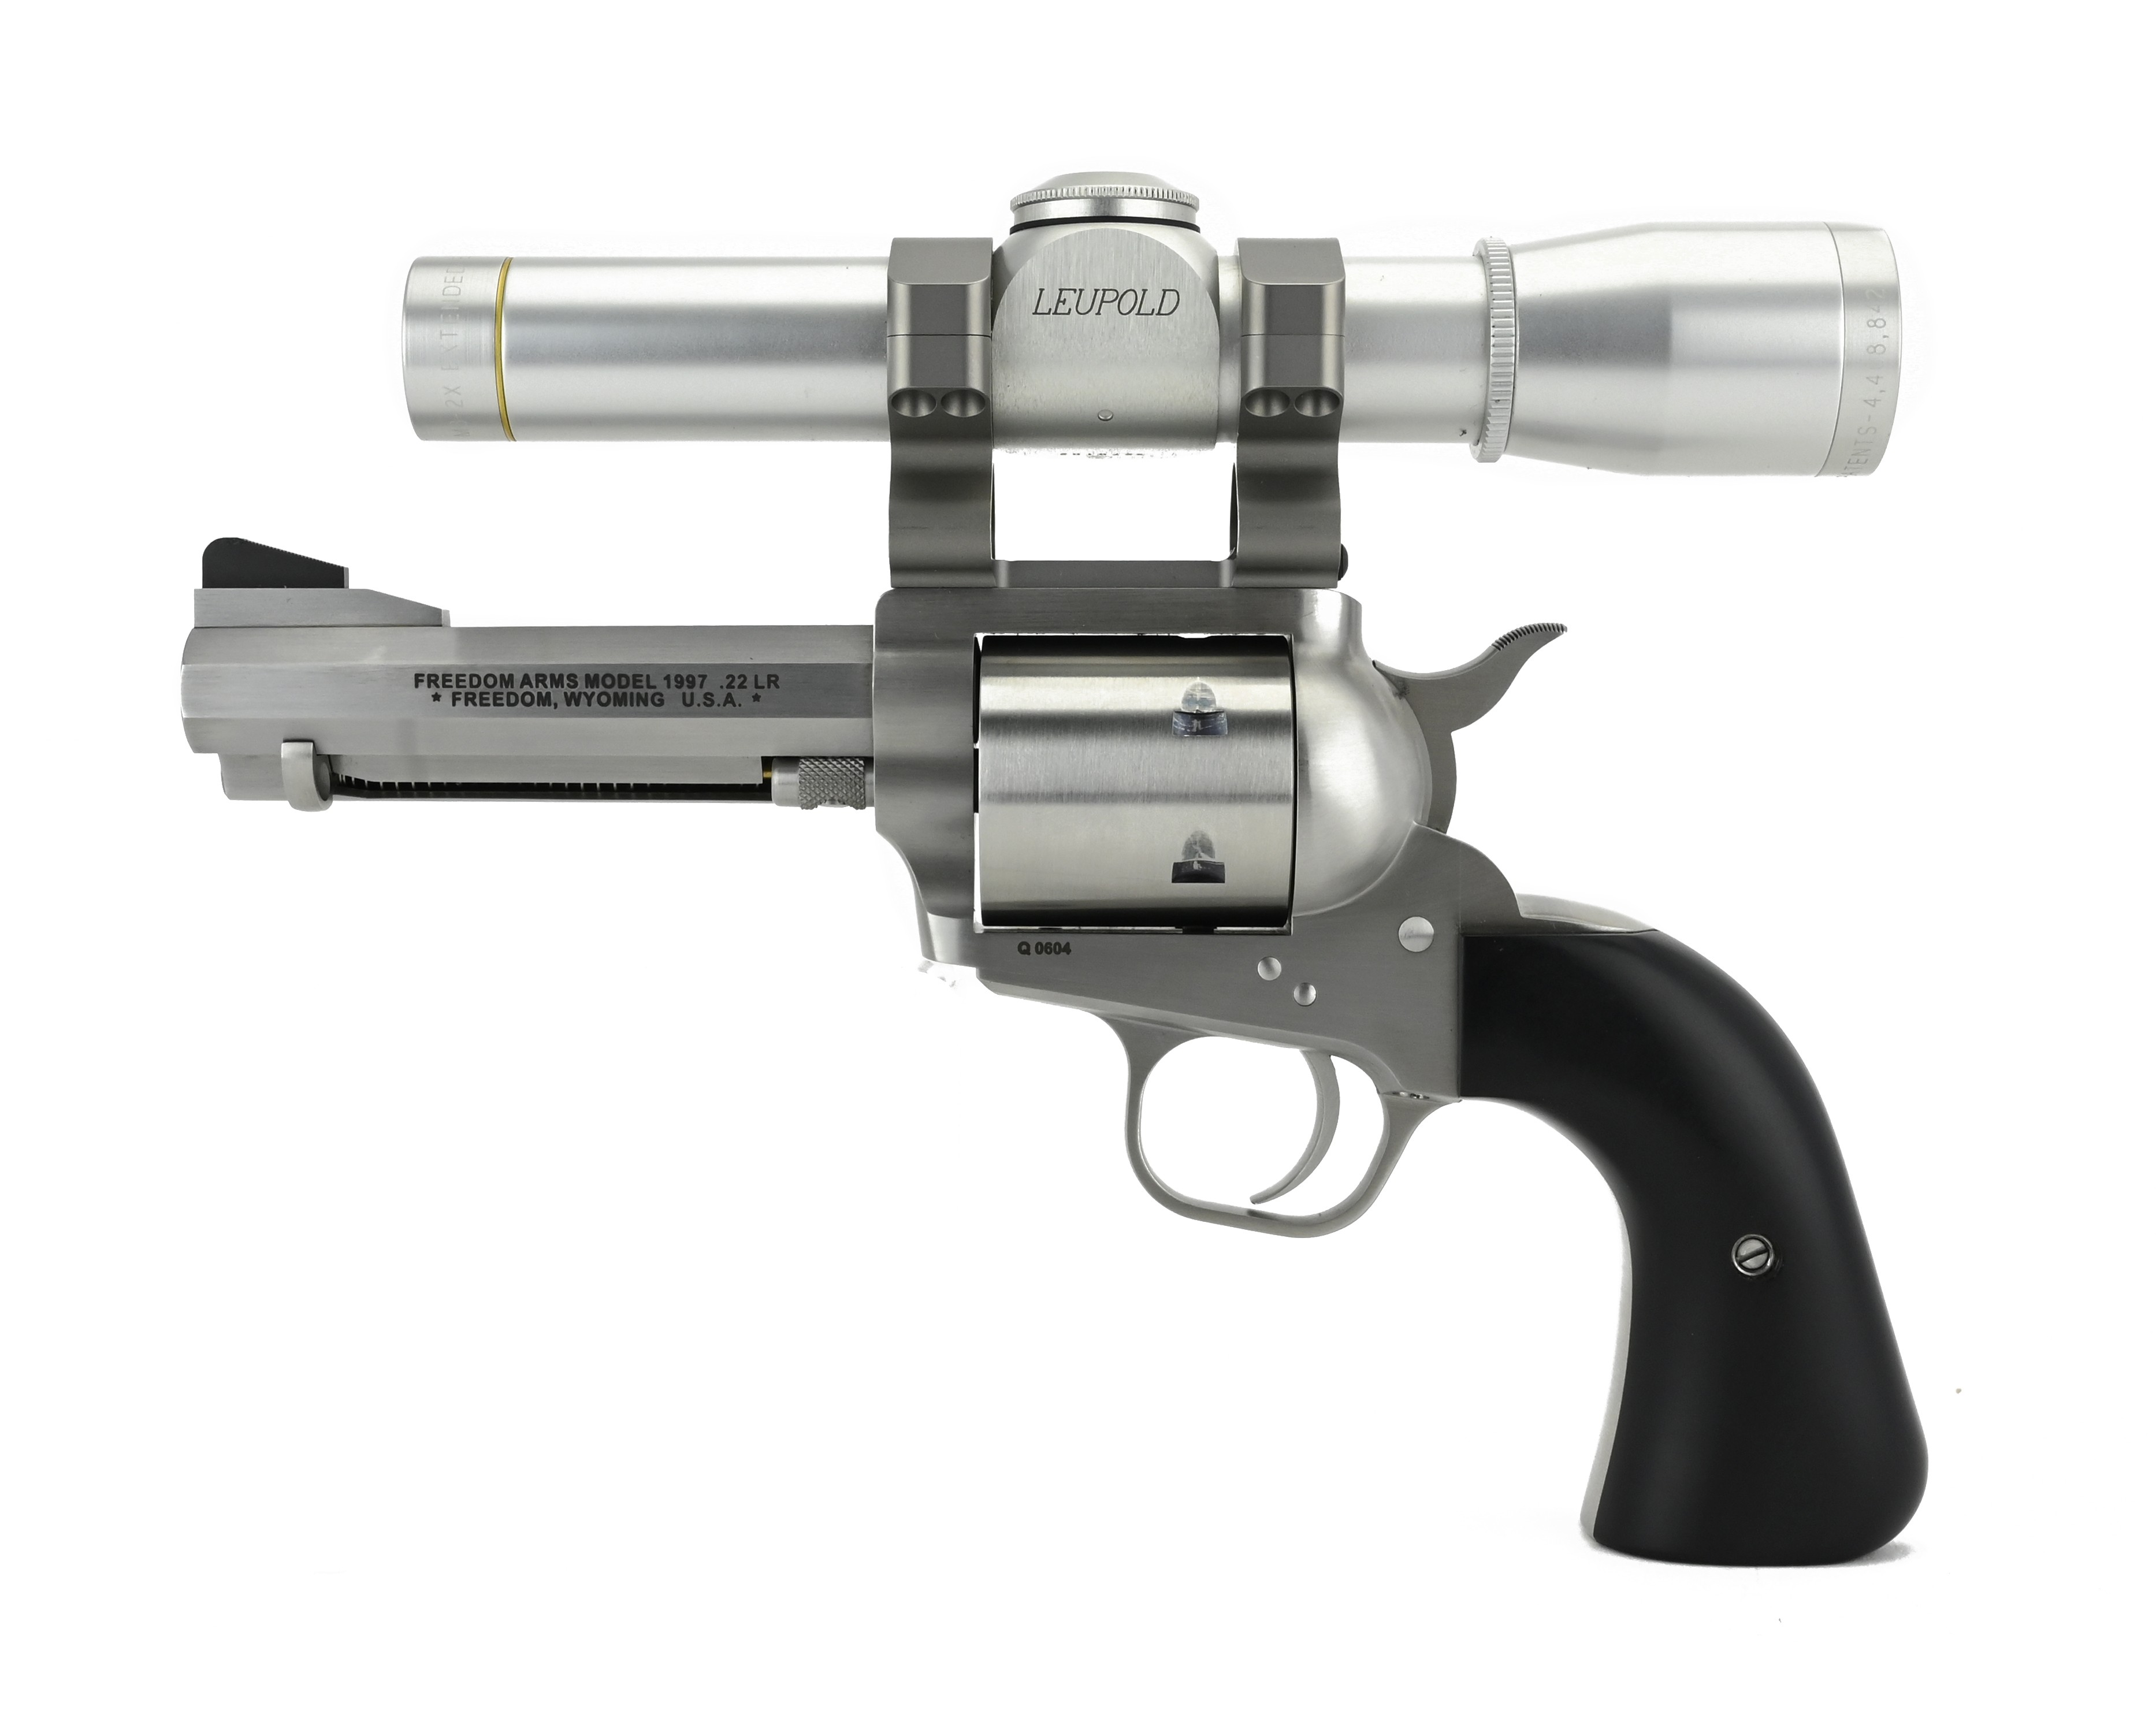 Freedom Arms 1997 .22 LR/.22 Magnum caliber revolver for sale.